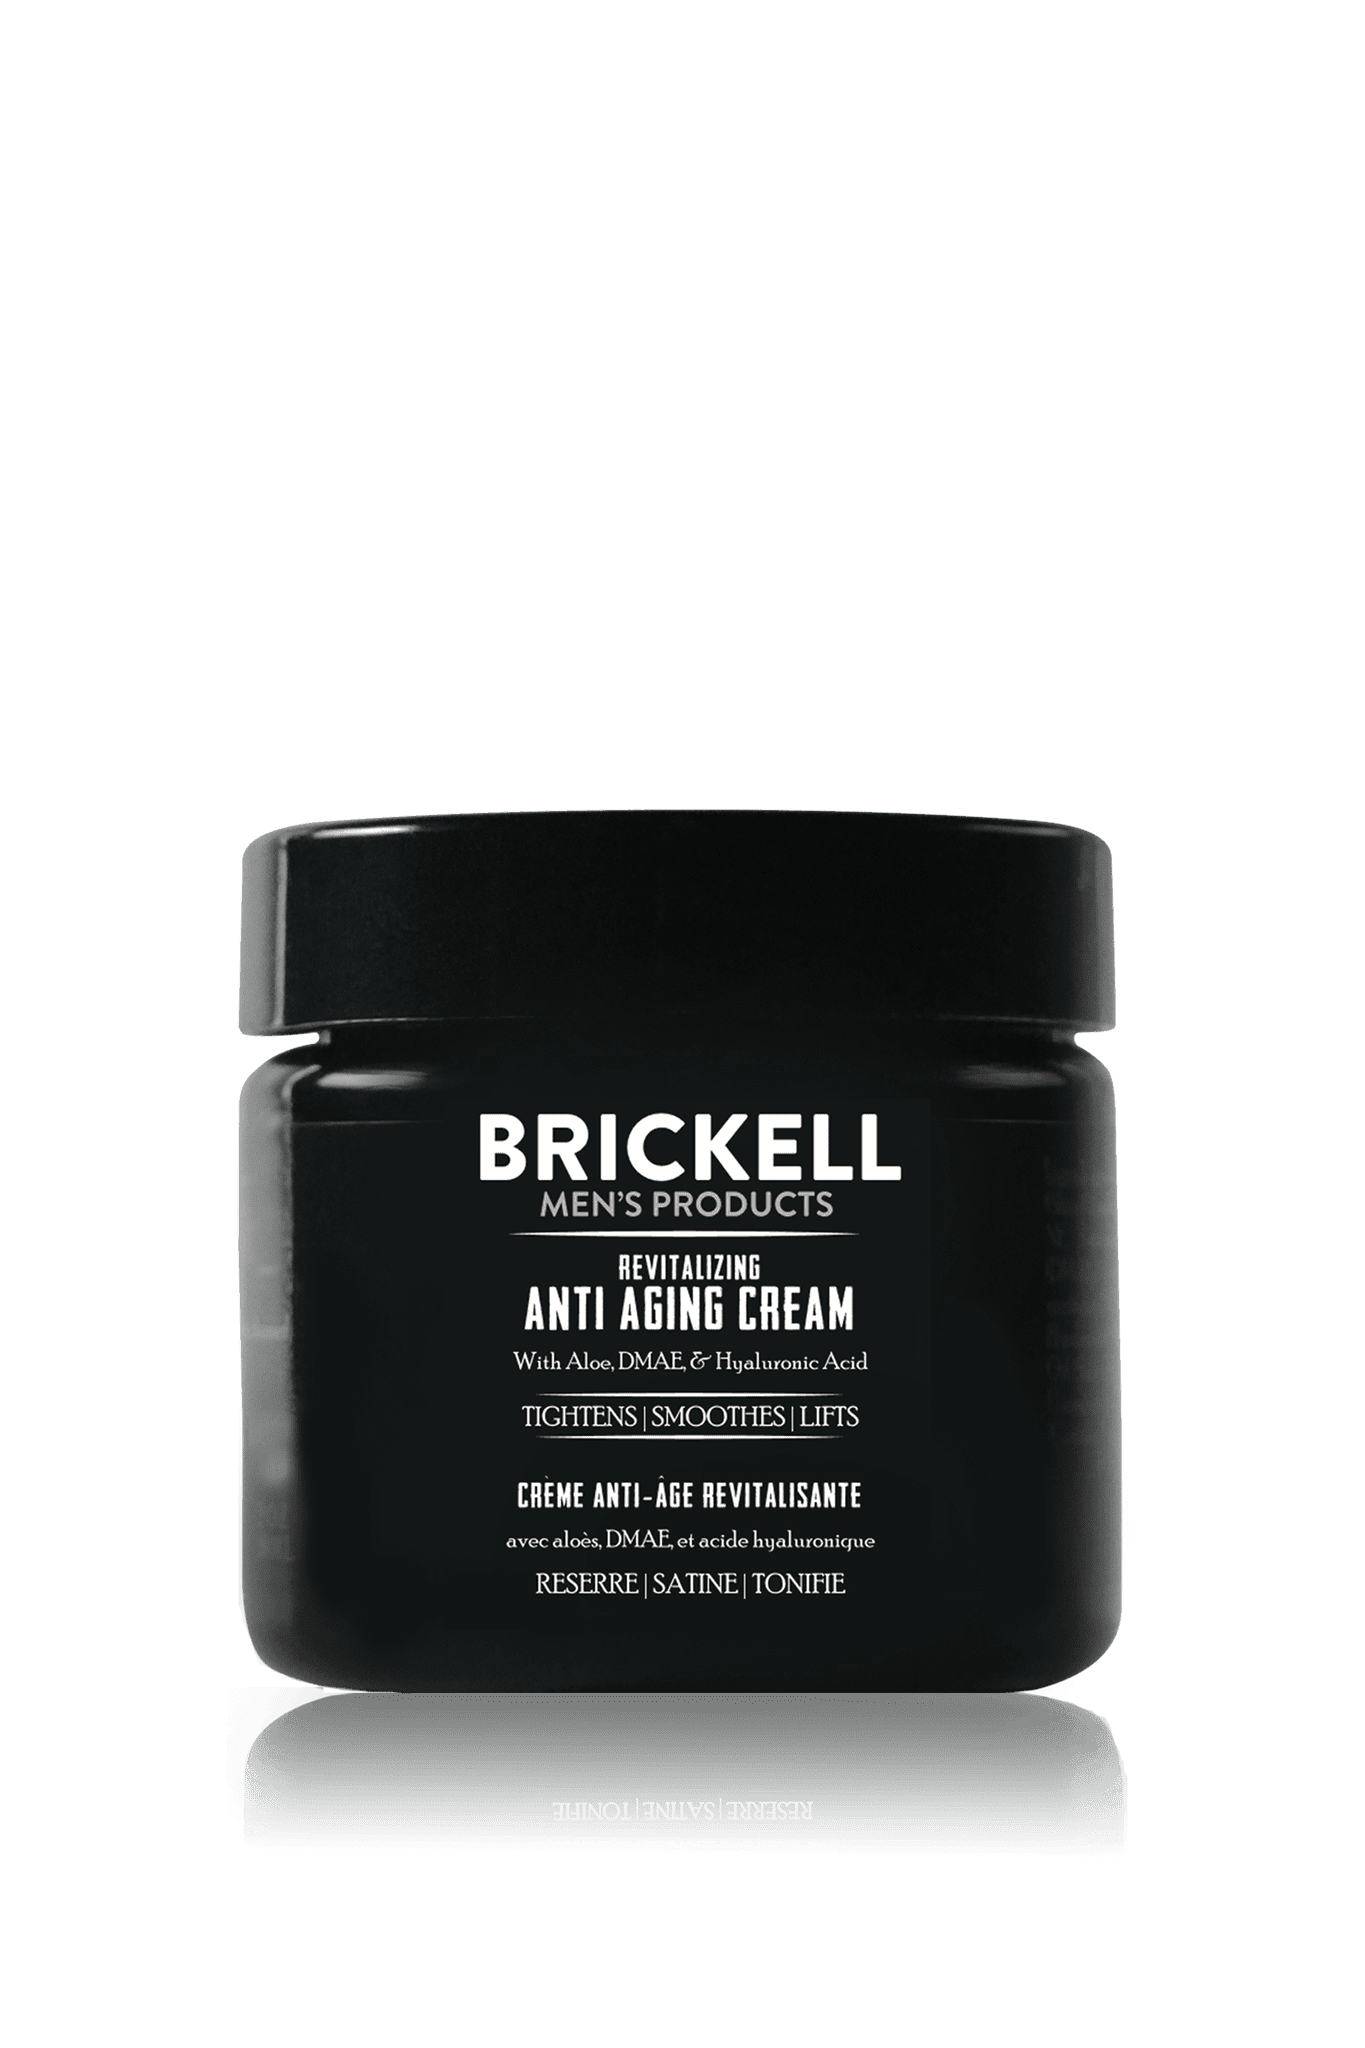 brickell anti aging cream review